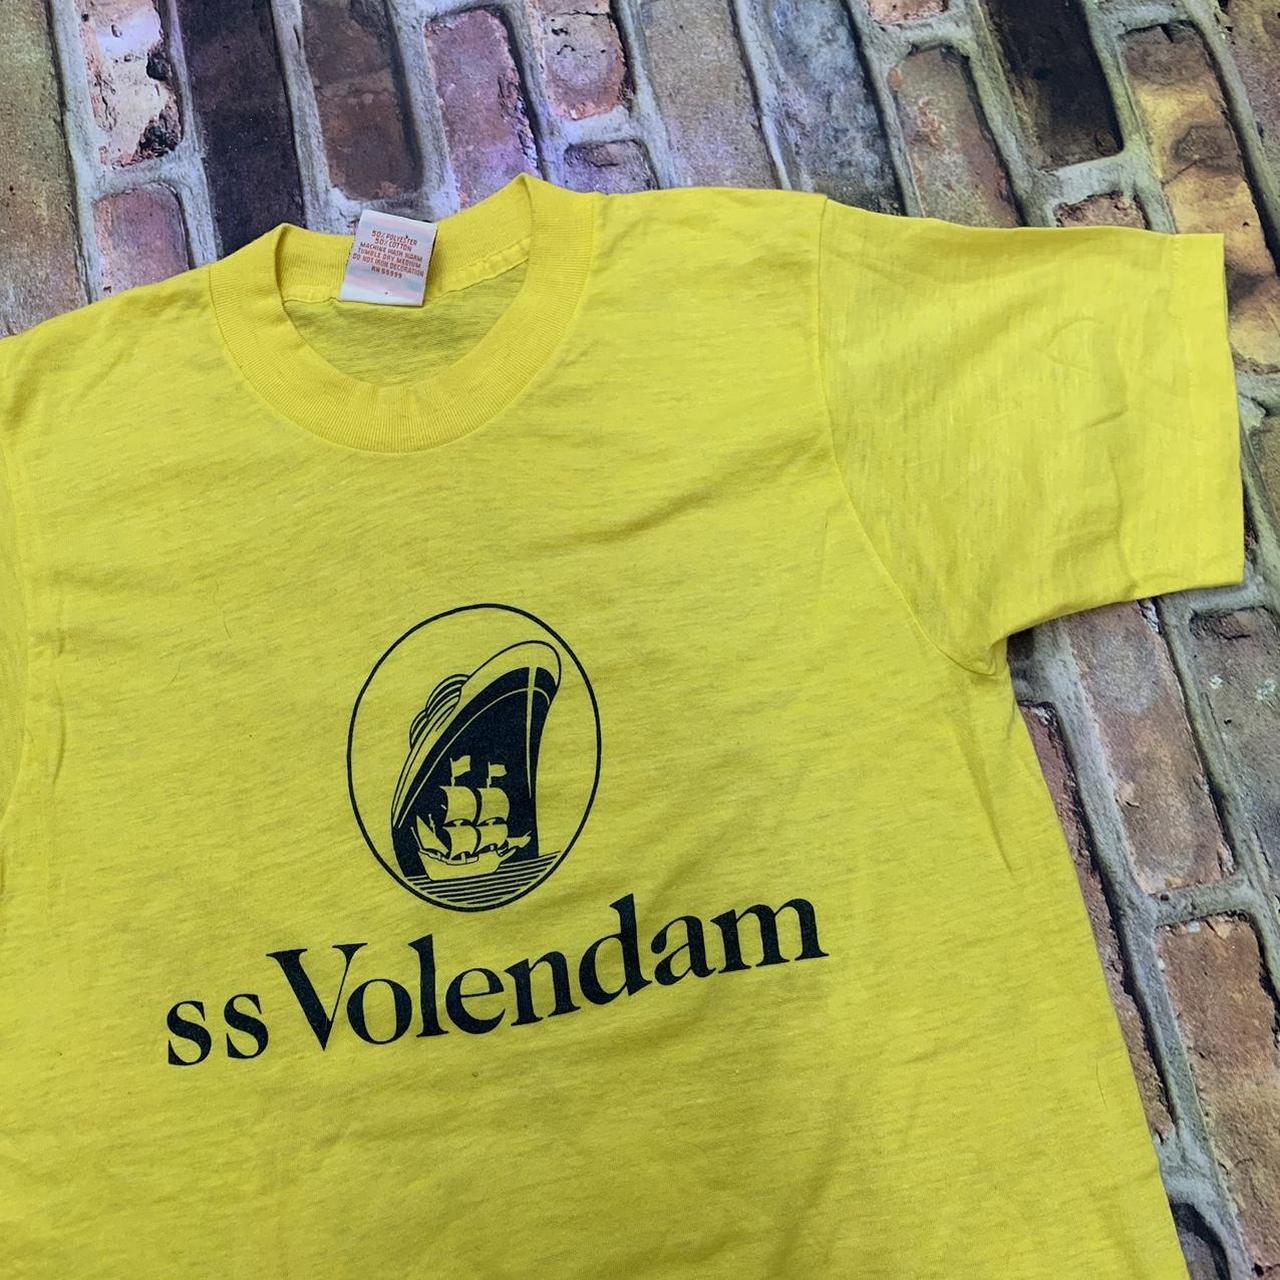 Breakaway Men's Yellow T-shirt (3)